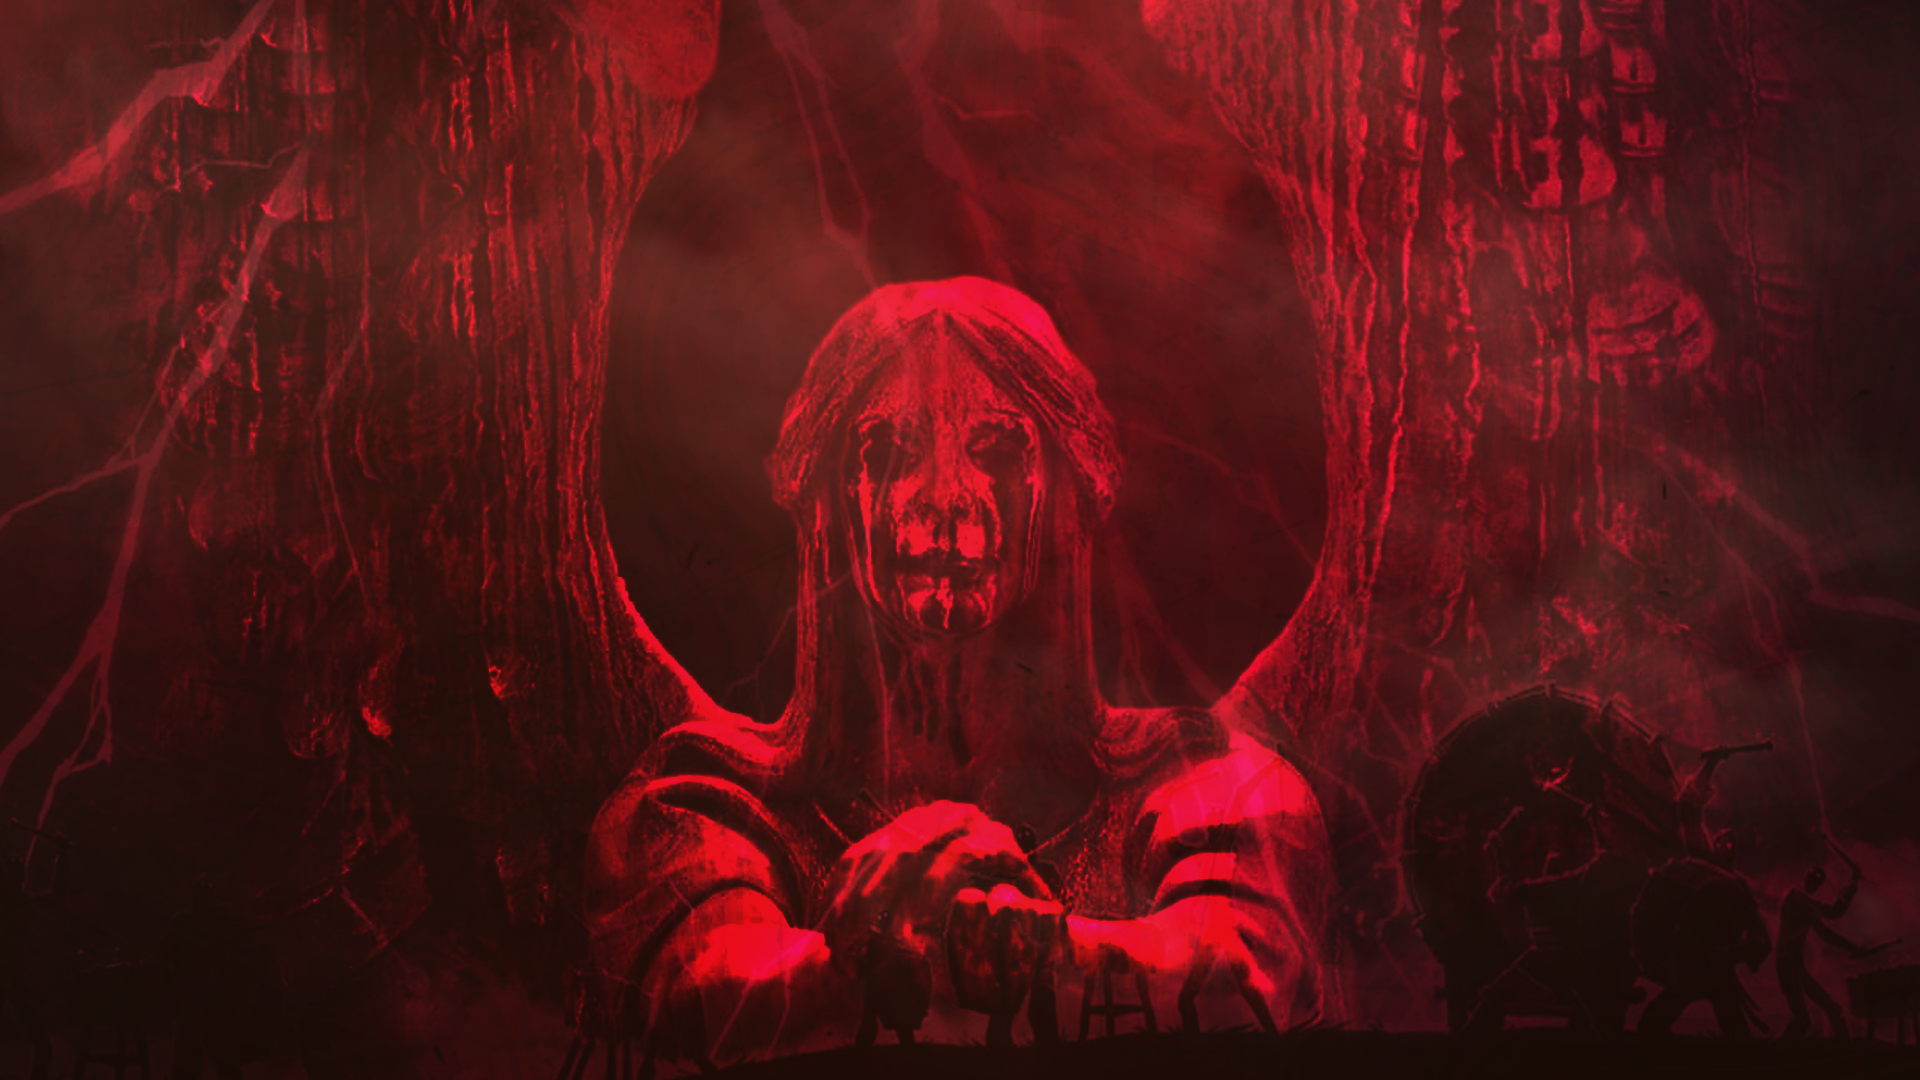 Demon Cover Art Hd Wallpaper Background Image 1920x1080